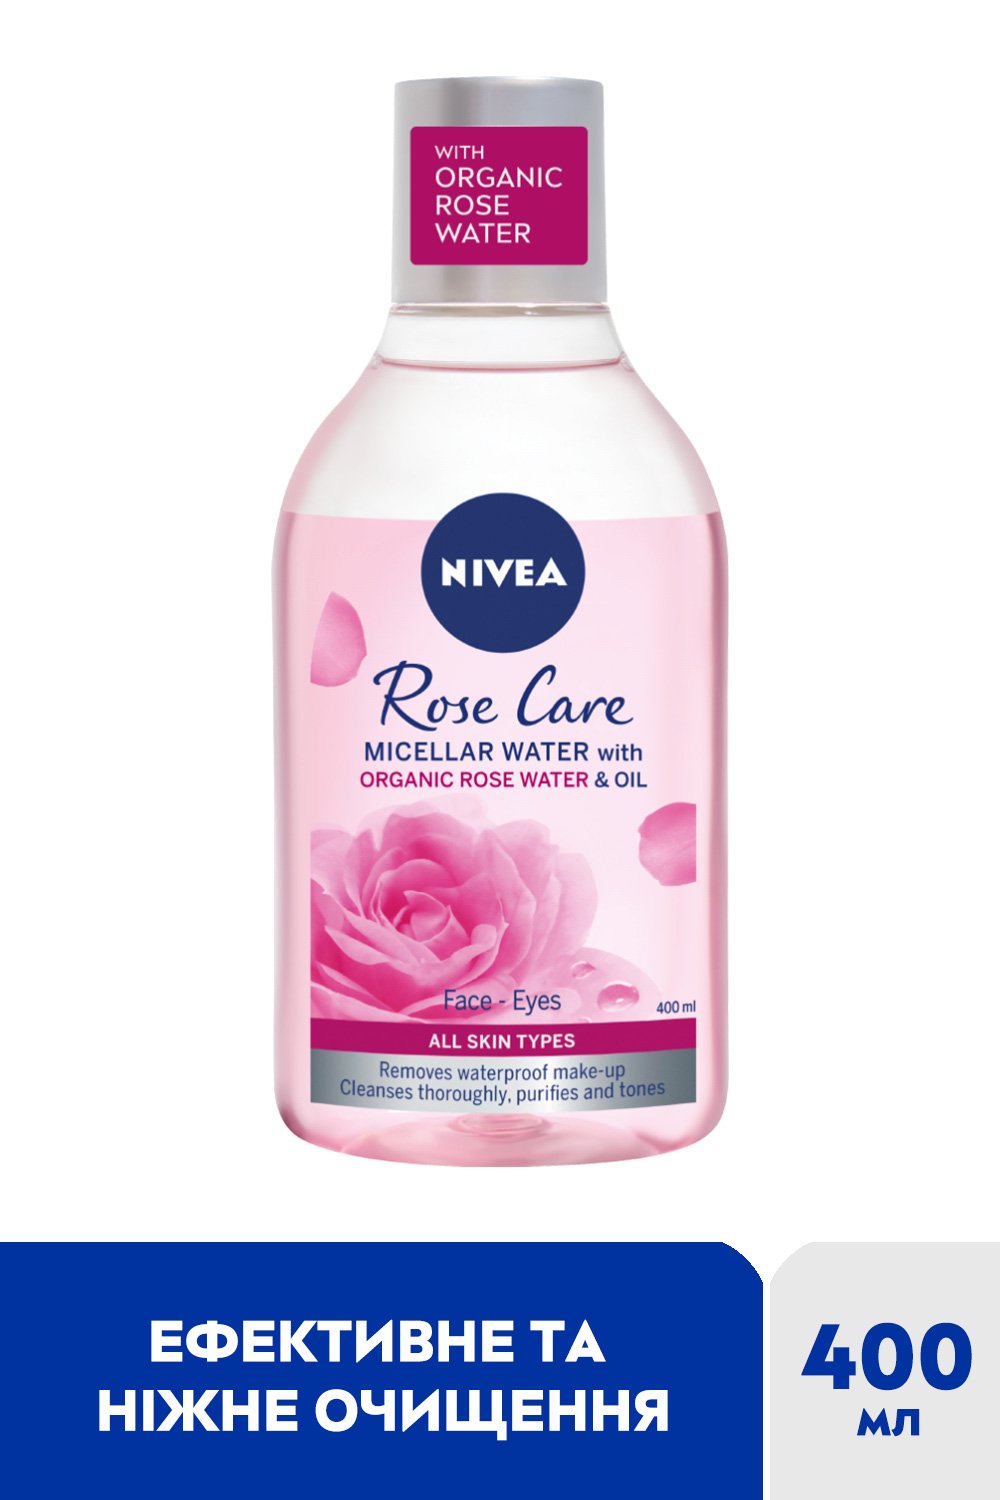 Мицеллярная вода Nivea Rose Care, 400 мл - фото 2